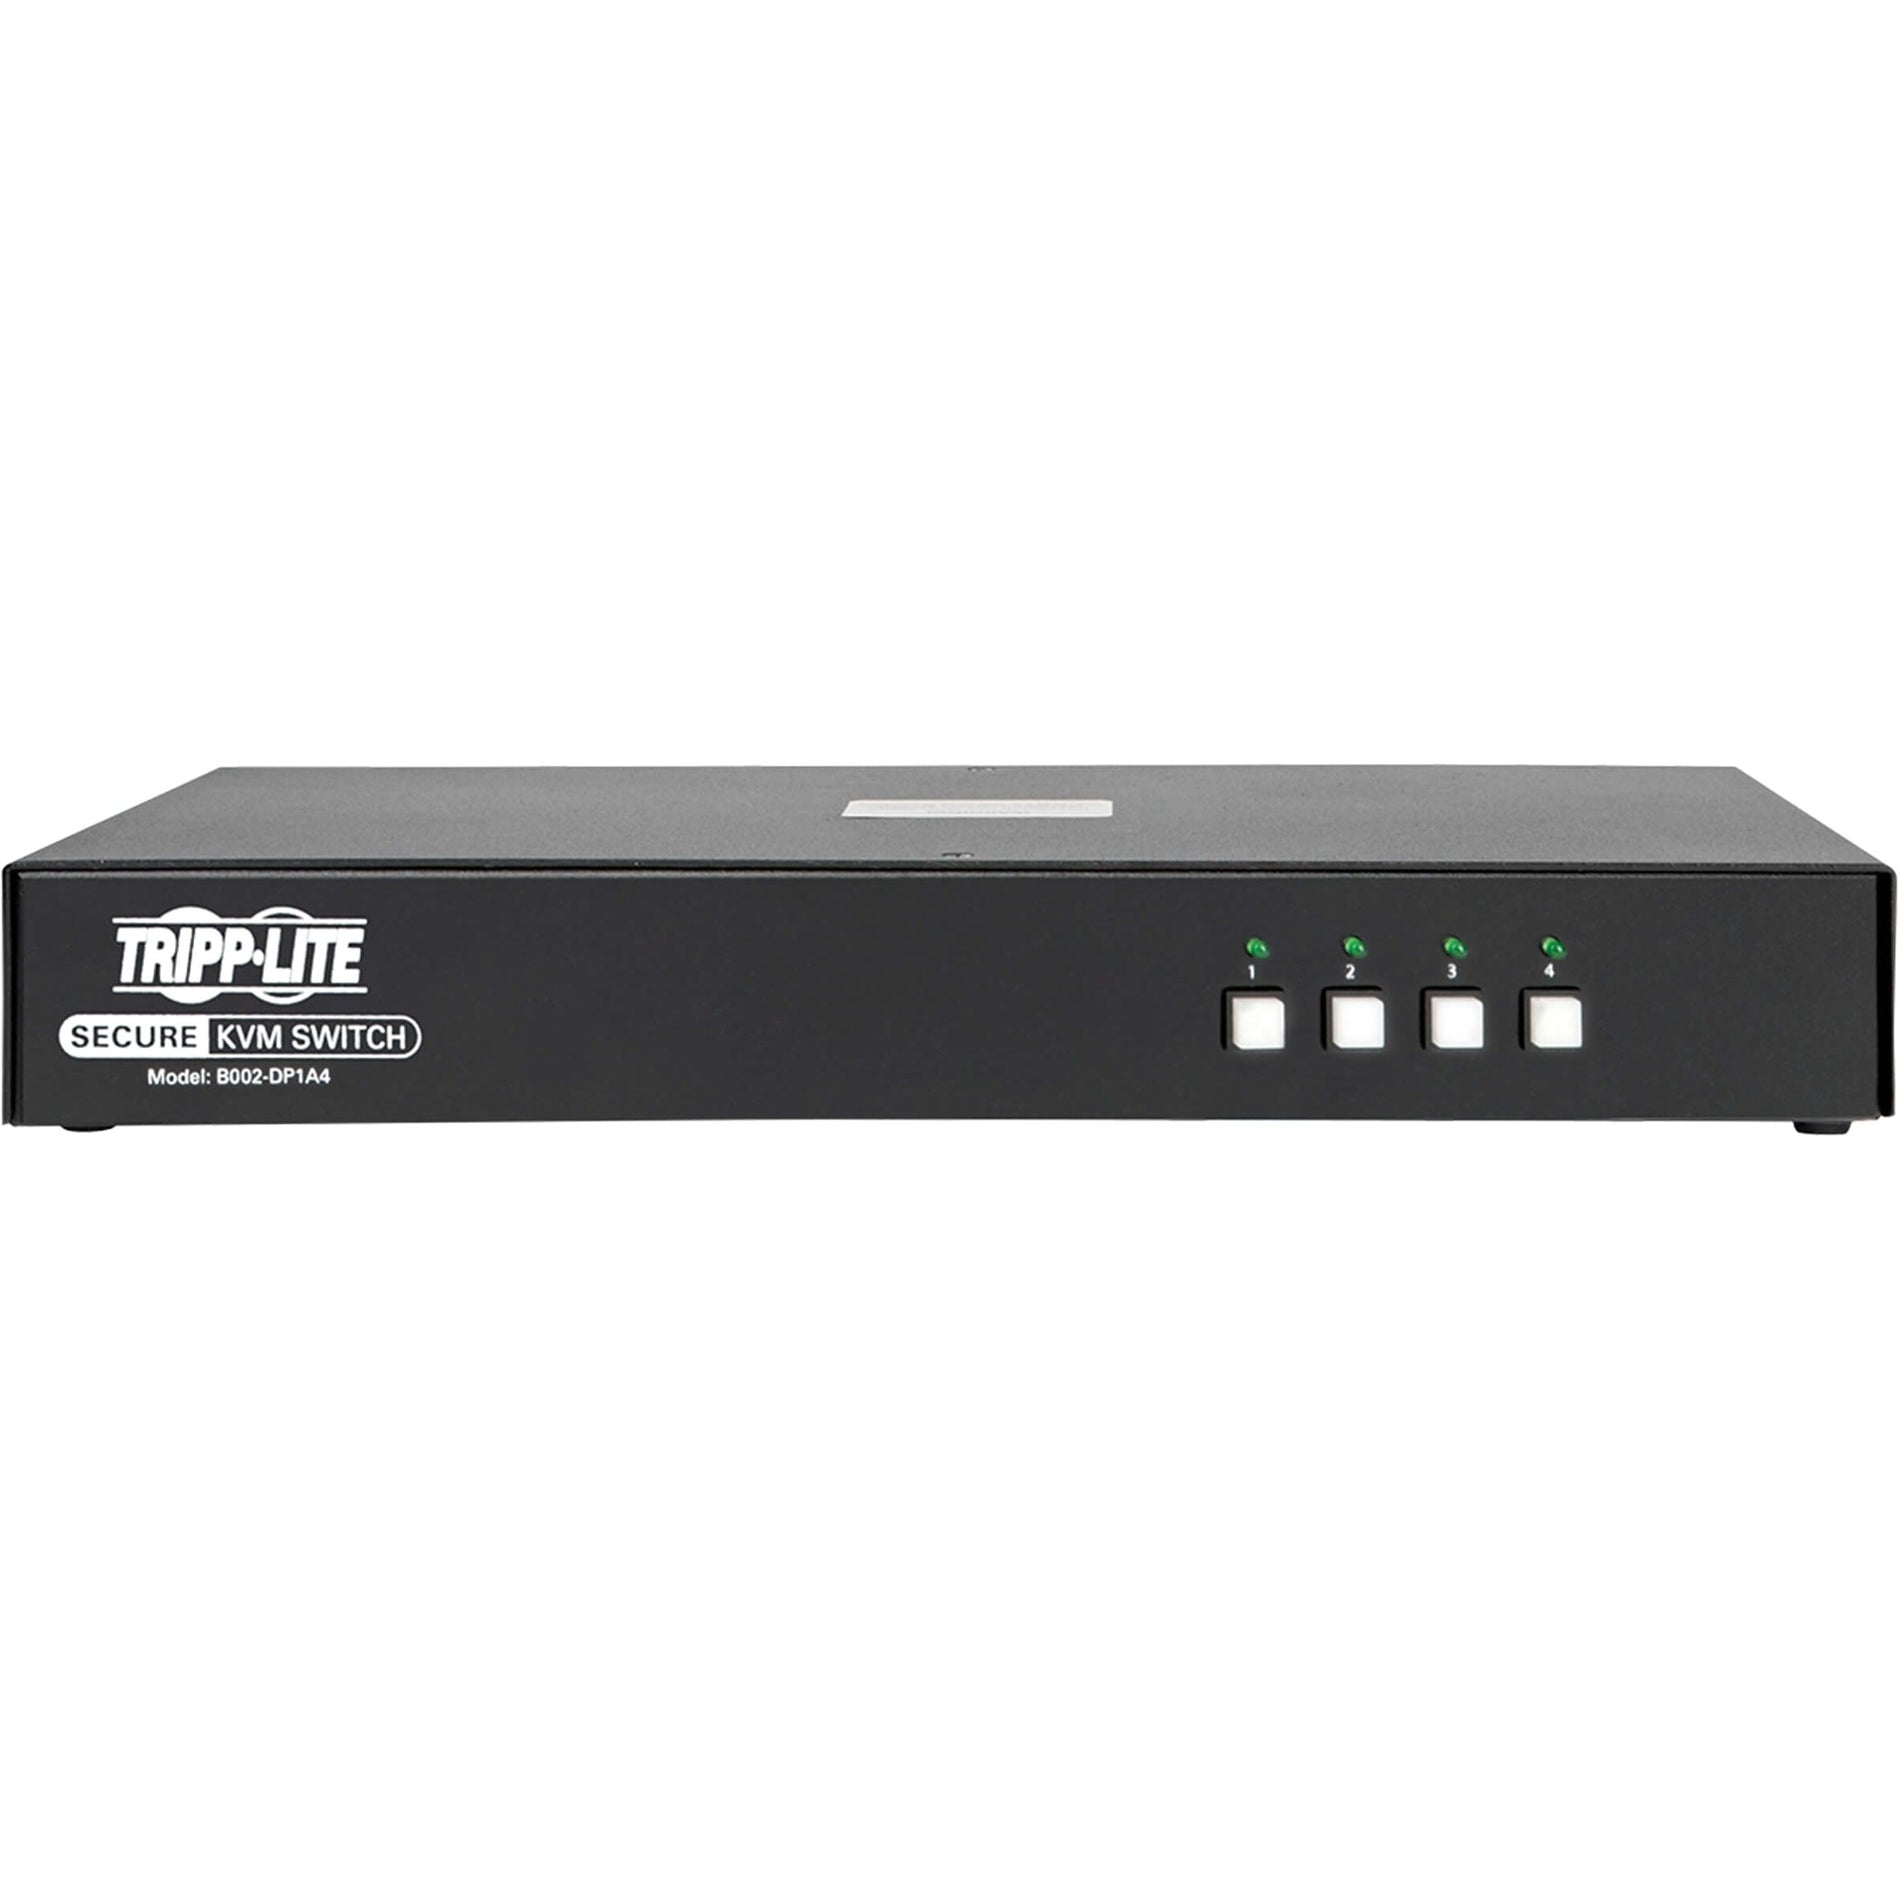 Tripp Lite B002-DP1A4 安全4端口NIAP PP3.0认证的DisplayPort KVM切换器，3840 x 2160分辨率，3年保修 特利普利特